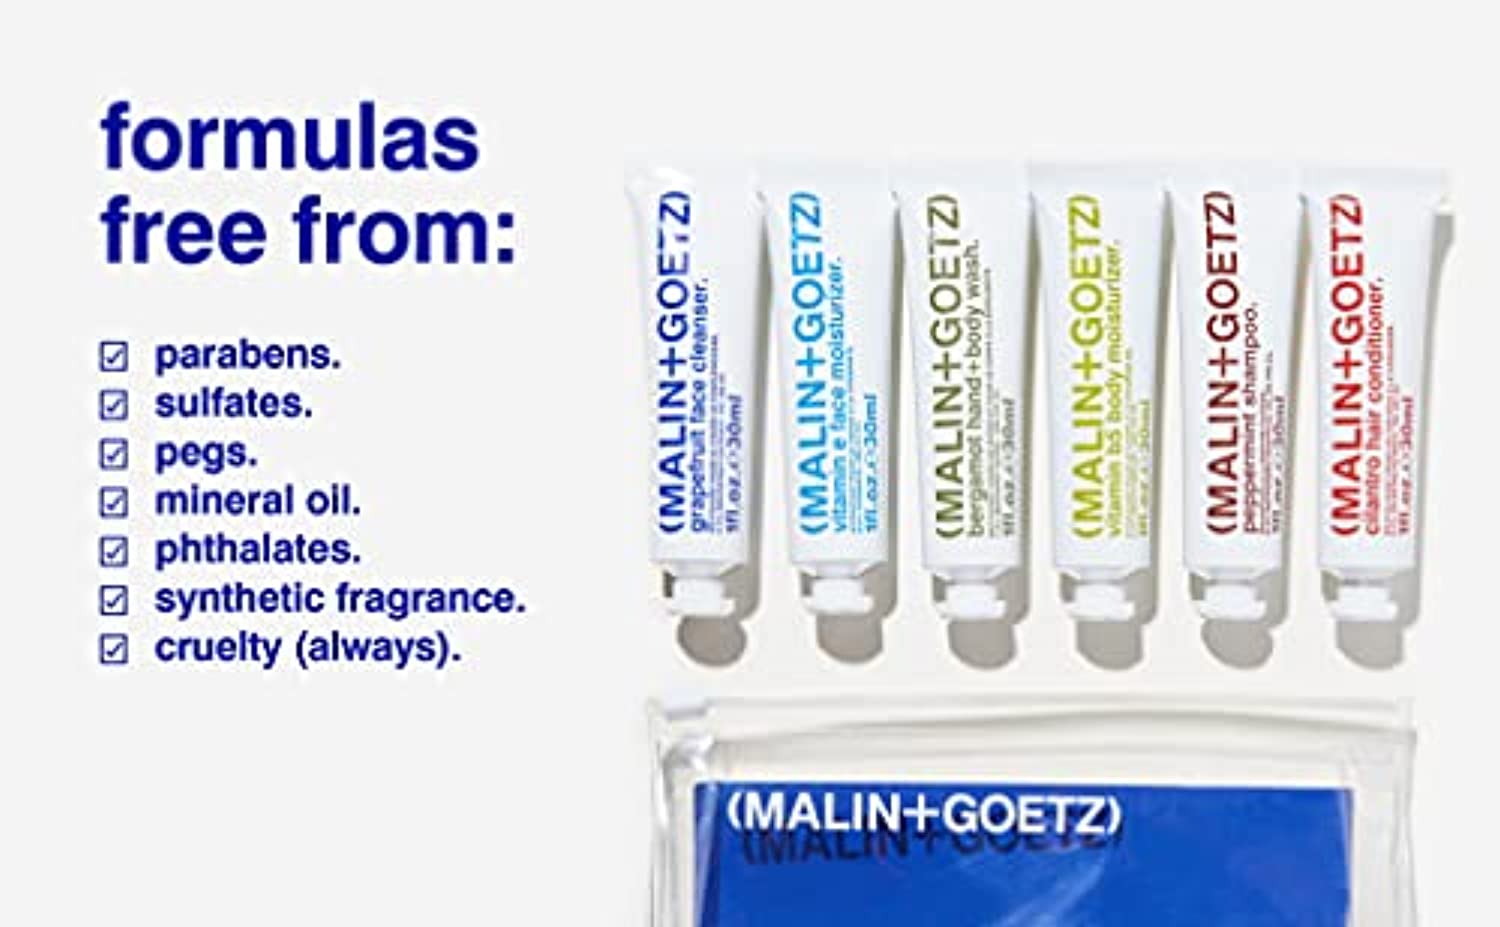 Malin + Goetz Essential Starter Kit- including hair shampoo & conditioner, facial cleanser & moisturizer, body wash & moisturizer, all natural ingredients, all skin types, cruelty-free, vegan